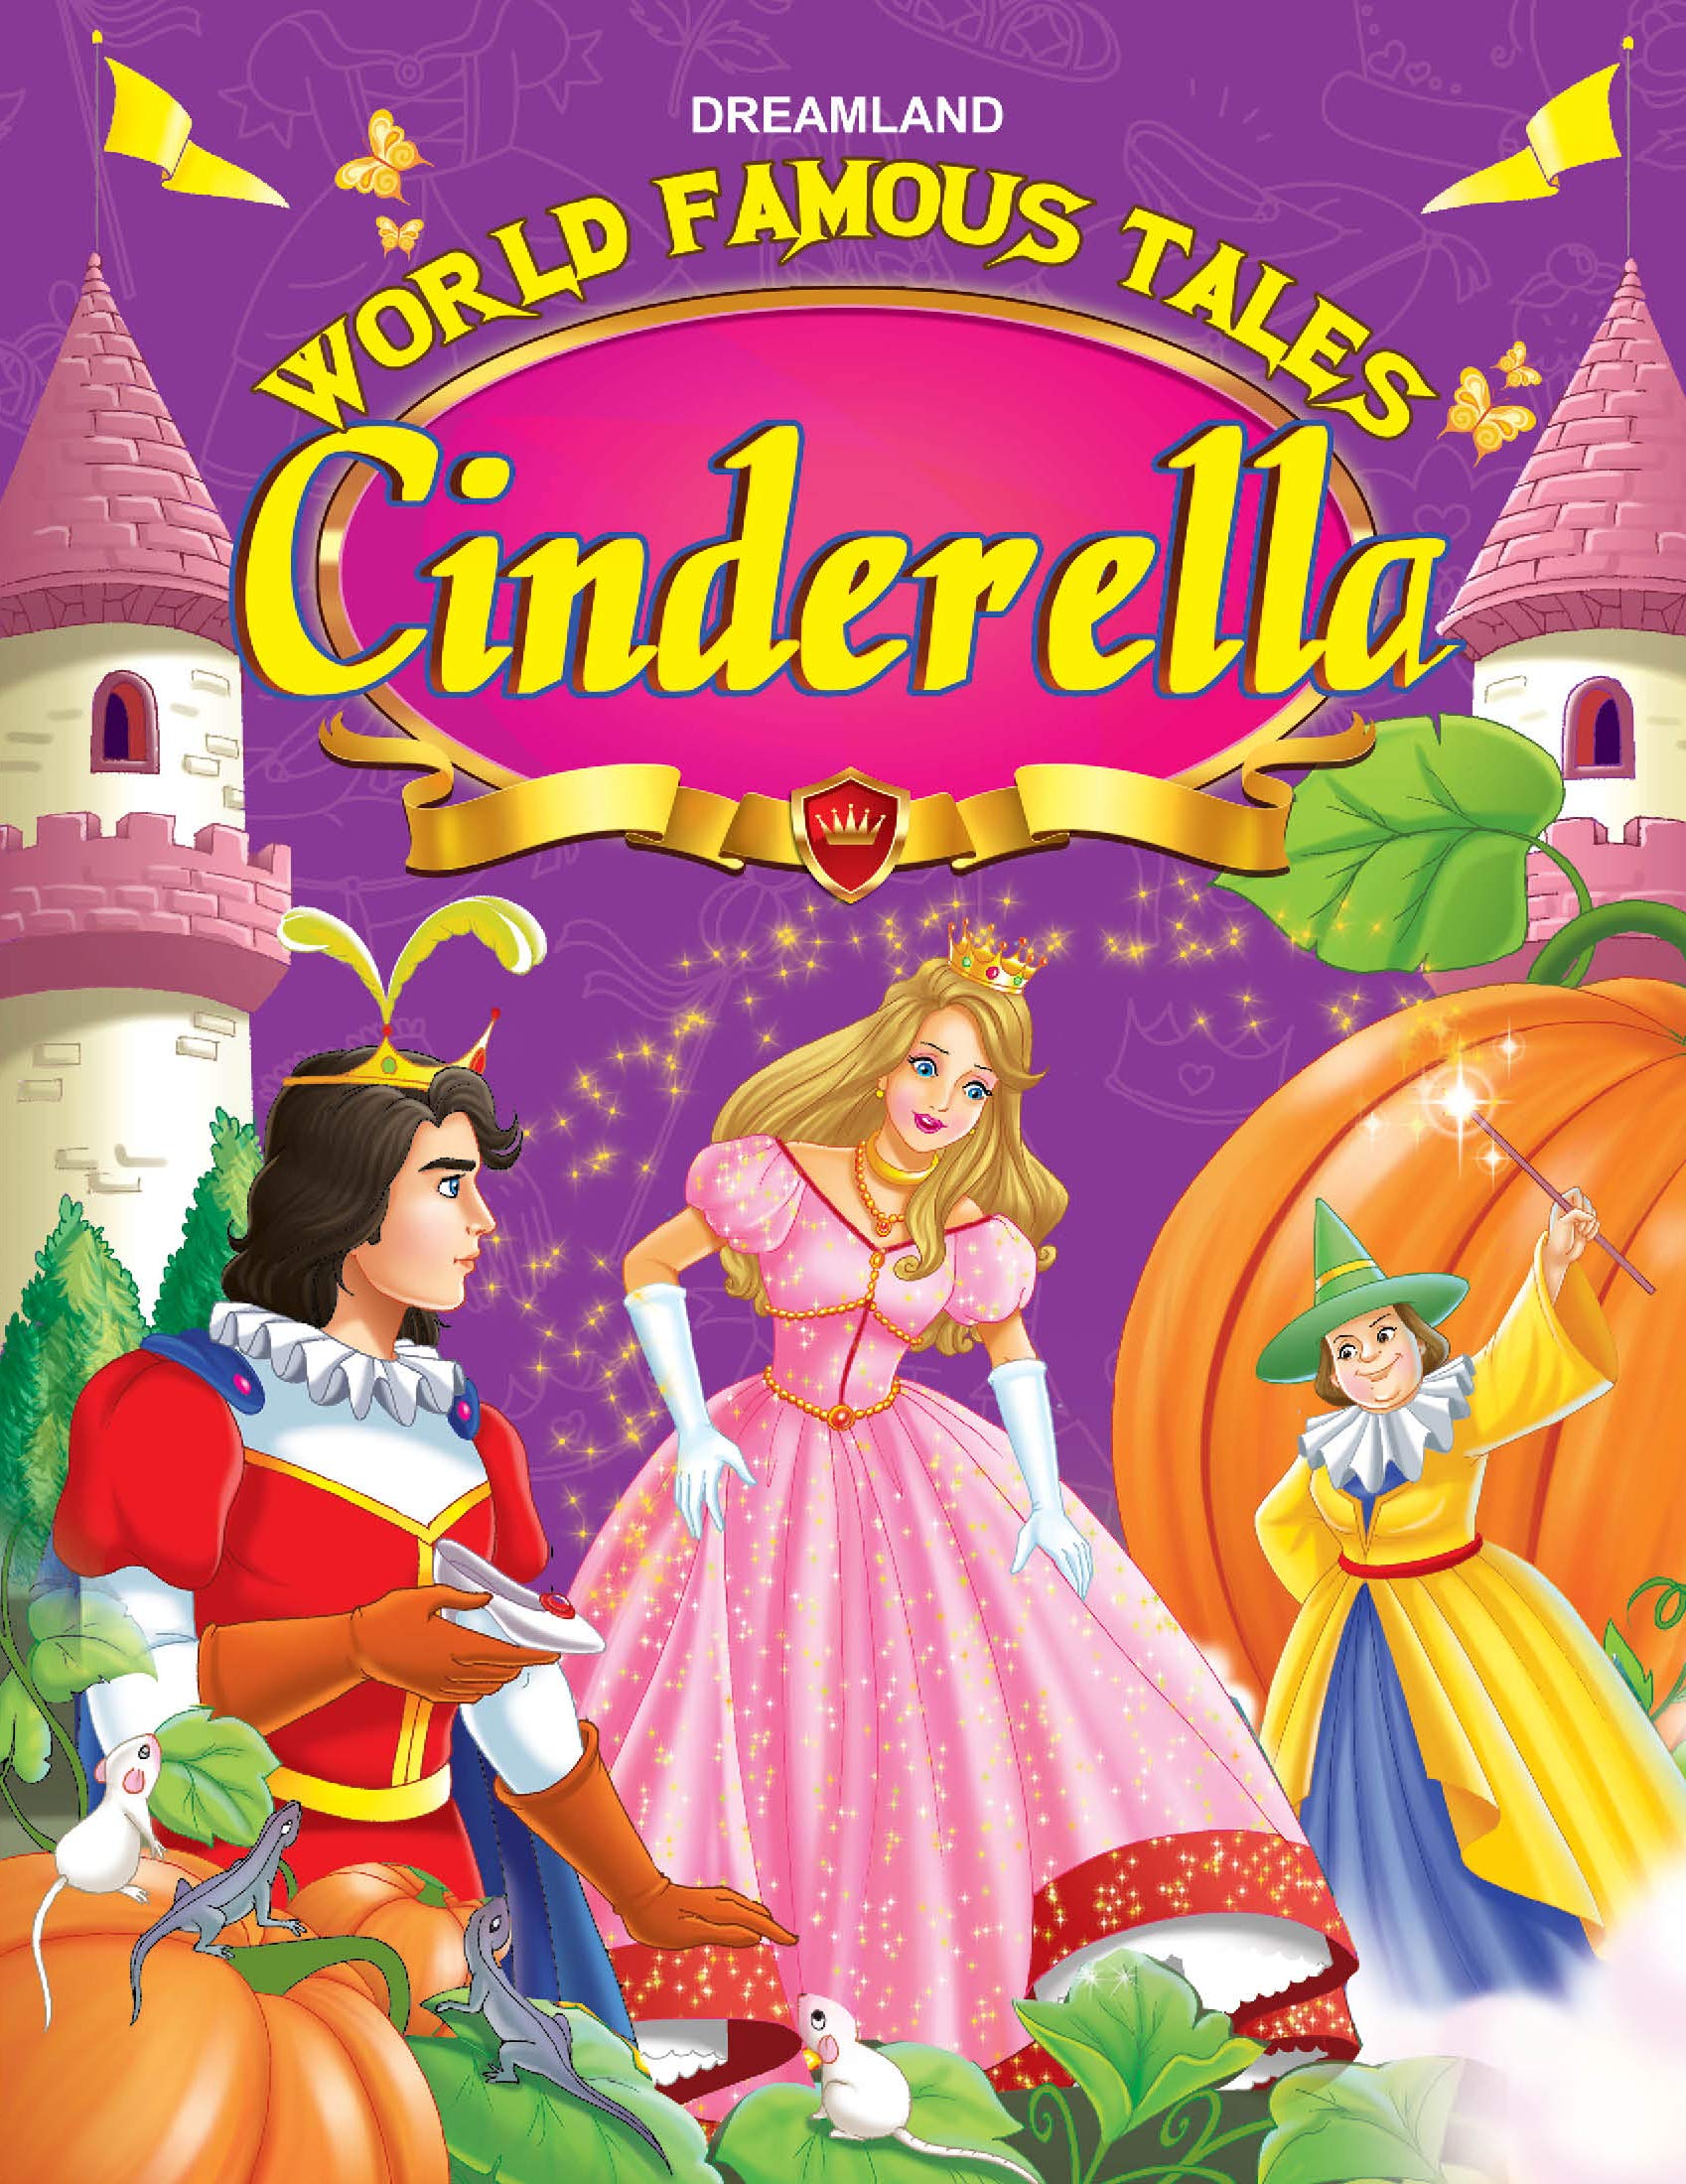 World Famous Tales - Cinderella